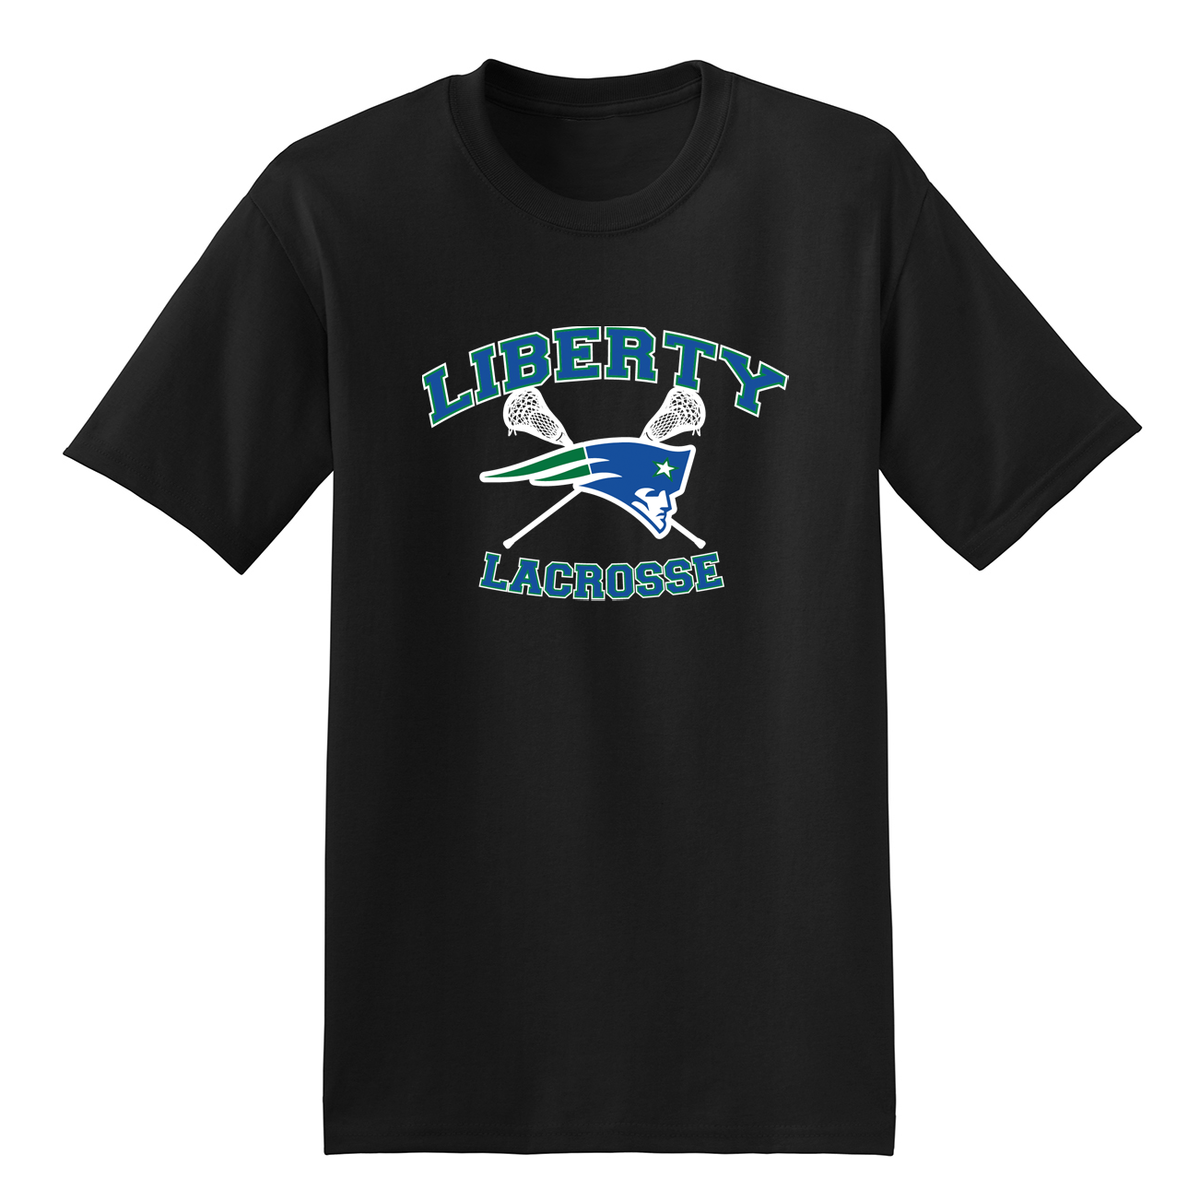 Liberty Lacrosse T-Shirt